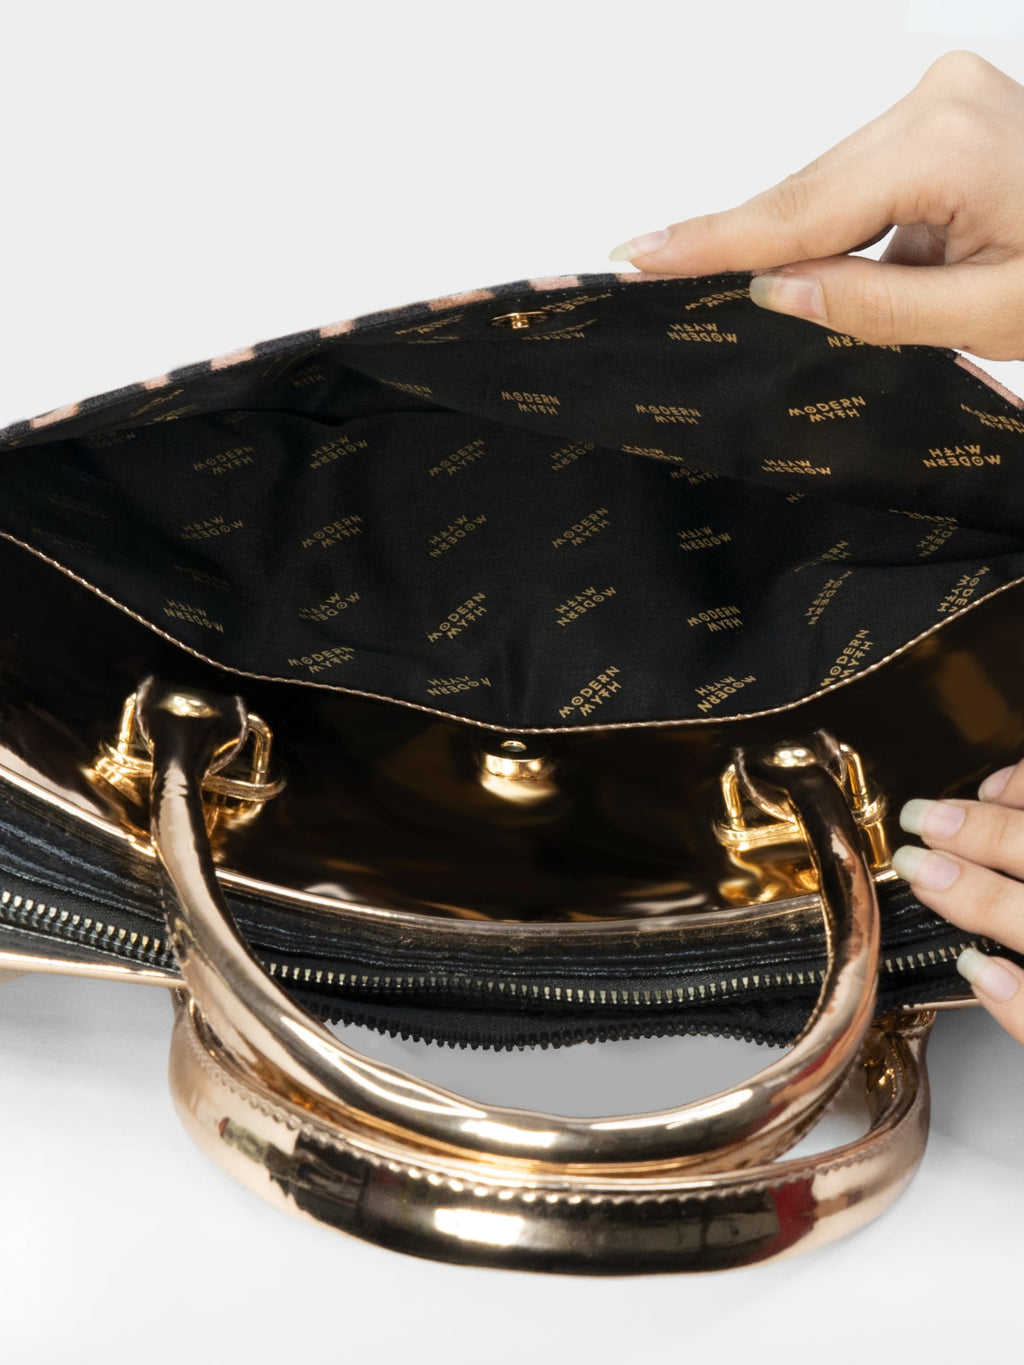 Alexander McQueen Spring 2020 Ready-to-Wear Collection | Popular handbags,  Bags, Purses and handbags